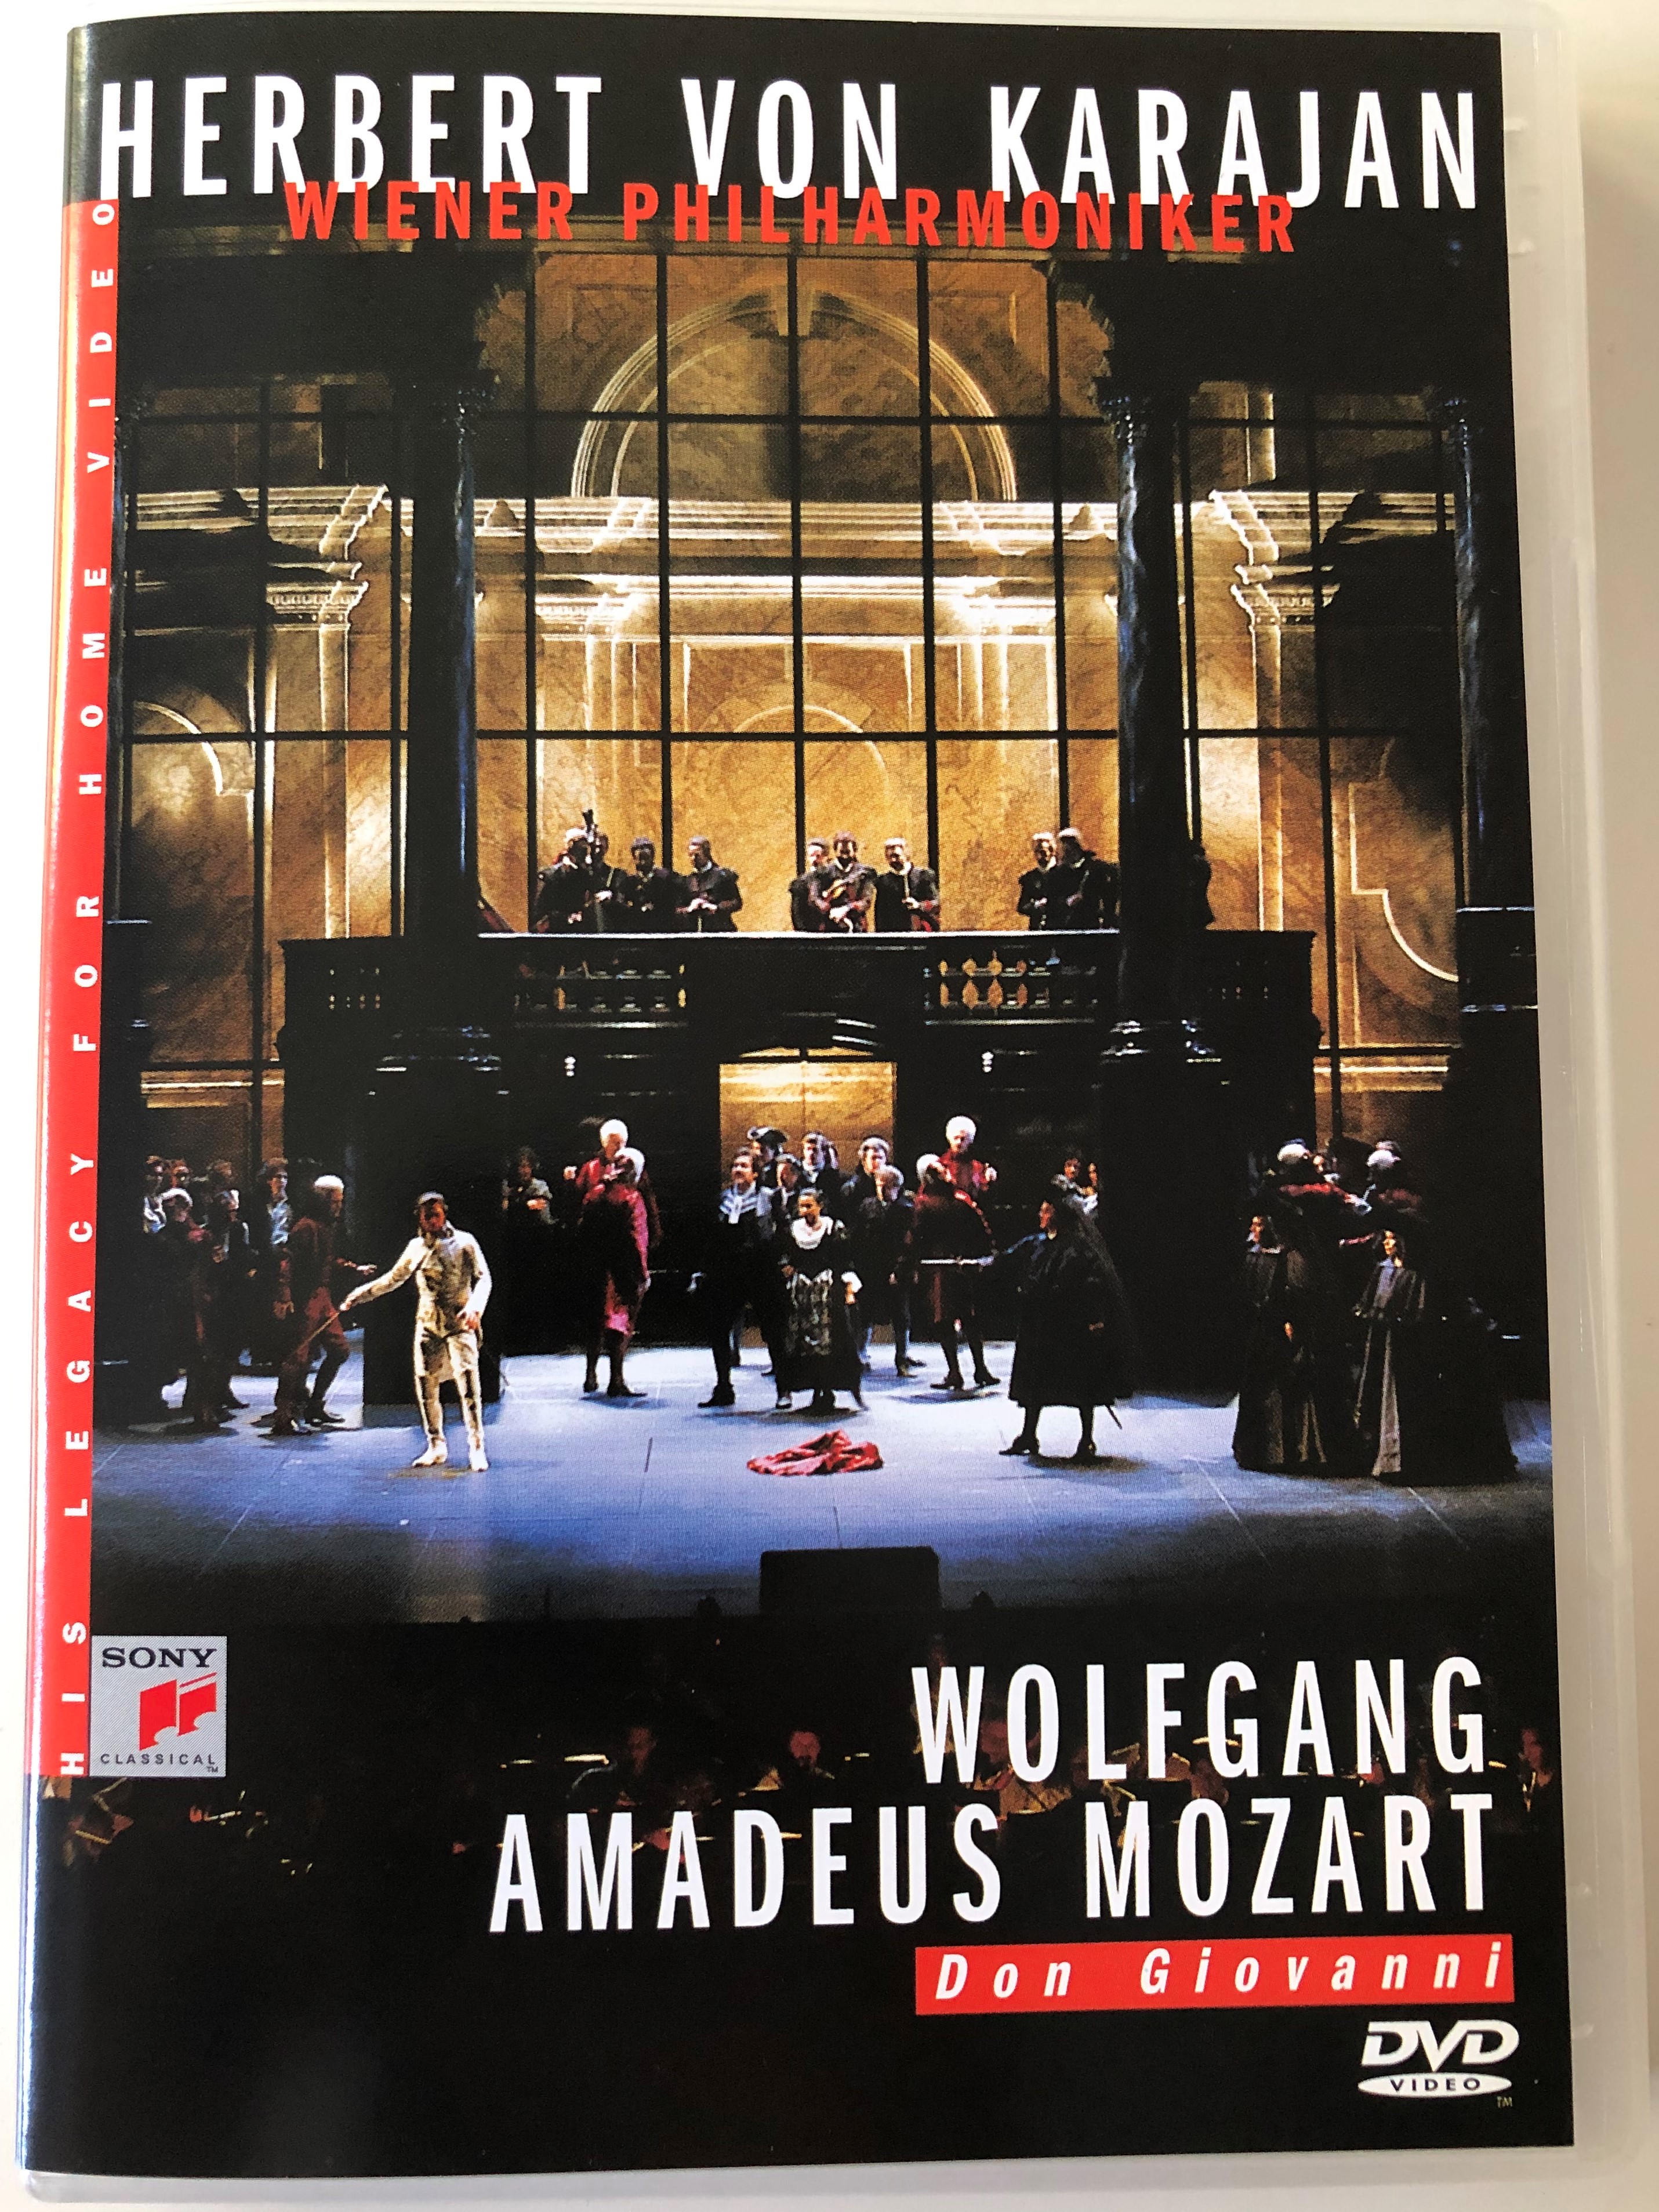 Don Giovanni - W.A.Mozart DVD 1991 Conducted by Herbert von Karajan /  Wiener Philharmoniker / Directed by Michael Hampe / Recorded July 18-31  1987 in Salzburg, Austria / Sony Video - bibleinmylanguage